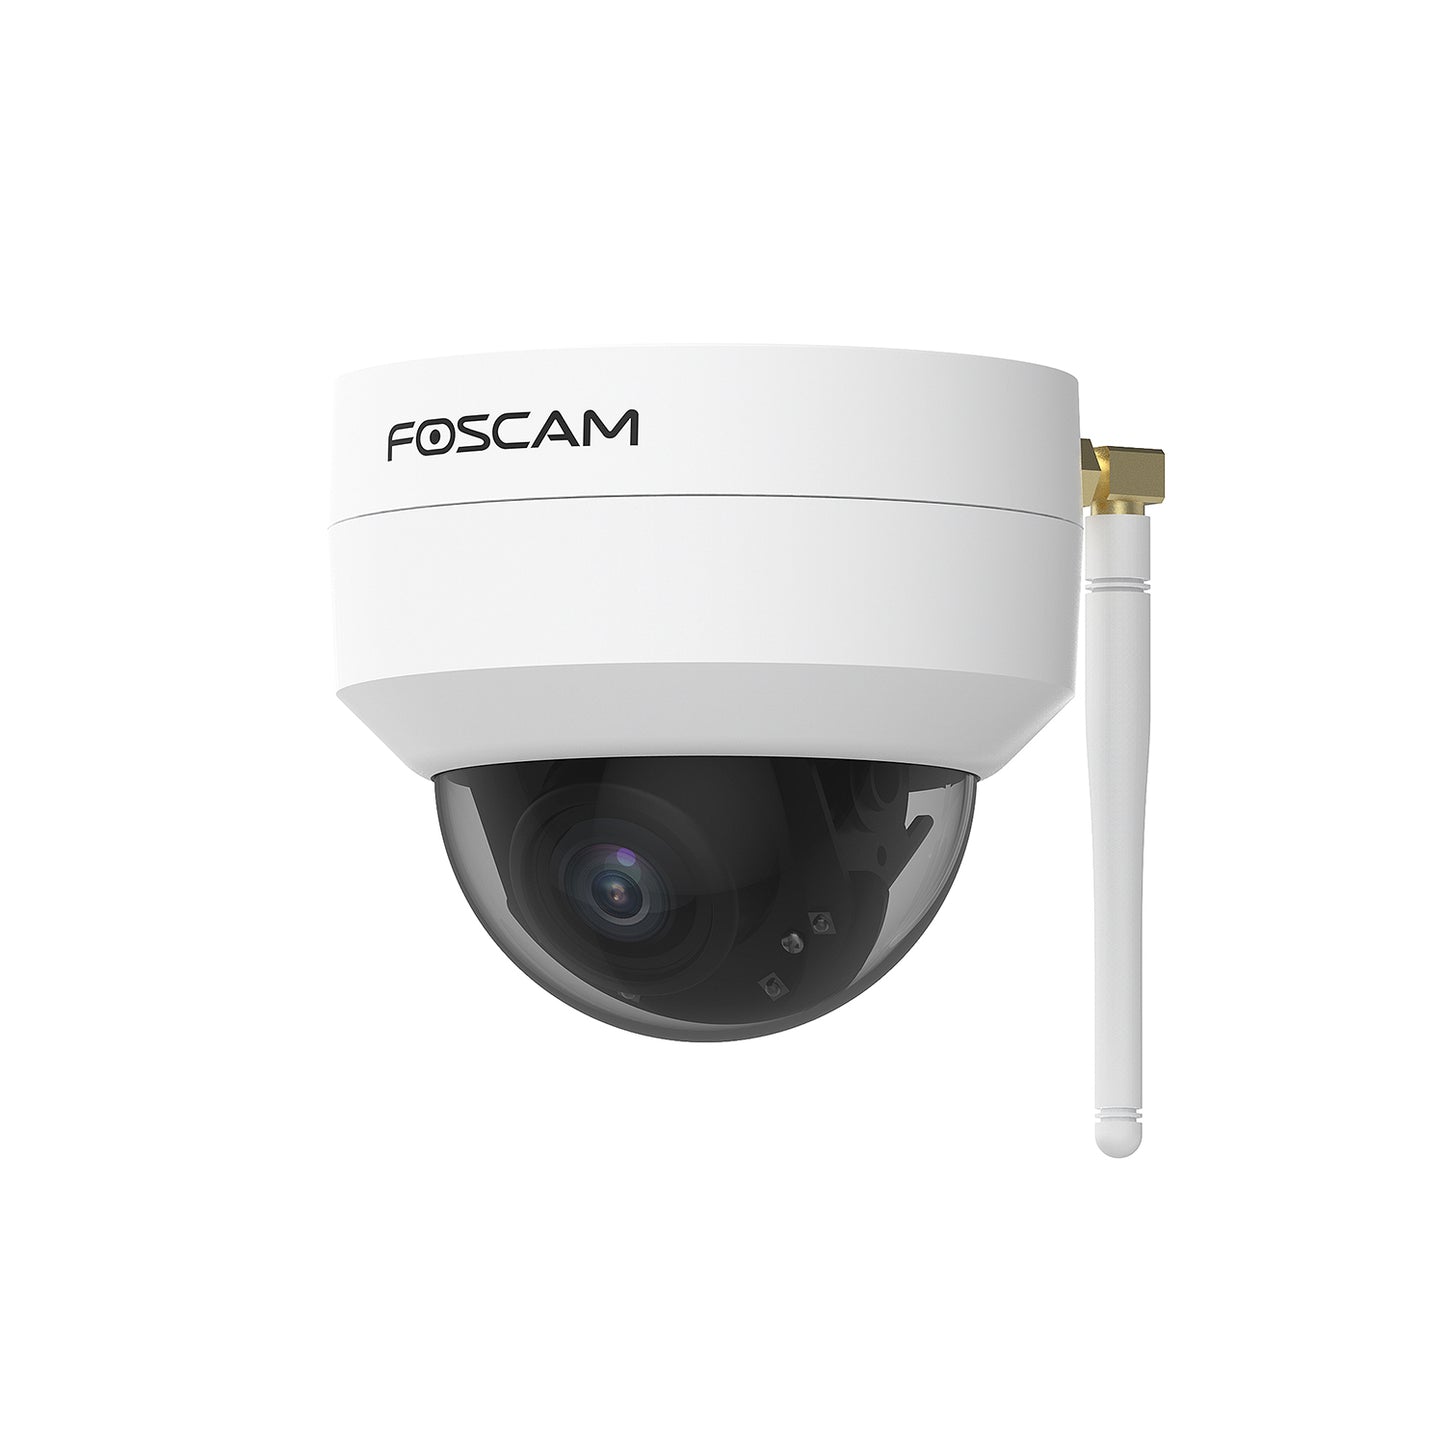 🔥$40 OFF 🔥 Foscam VZ4 4MP Outdoor Security WiFi Camera